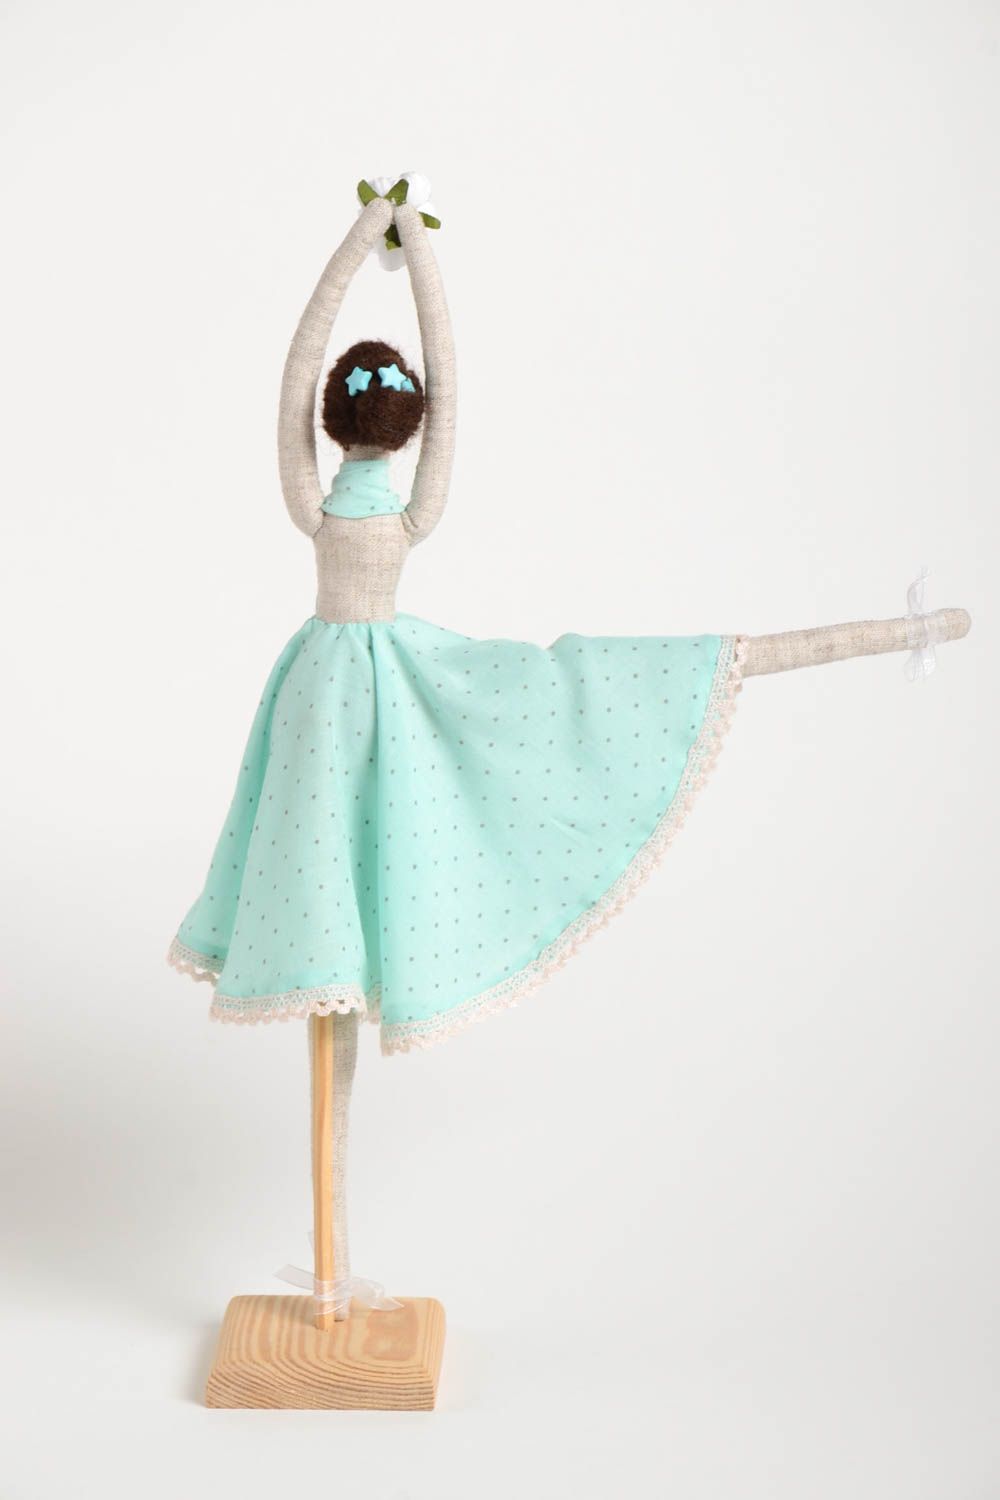 Handmade textile doll textile figurine rag doll modern art decorative use only photo 3